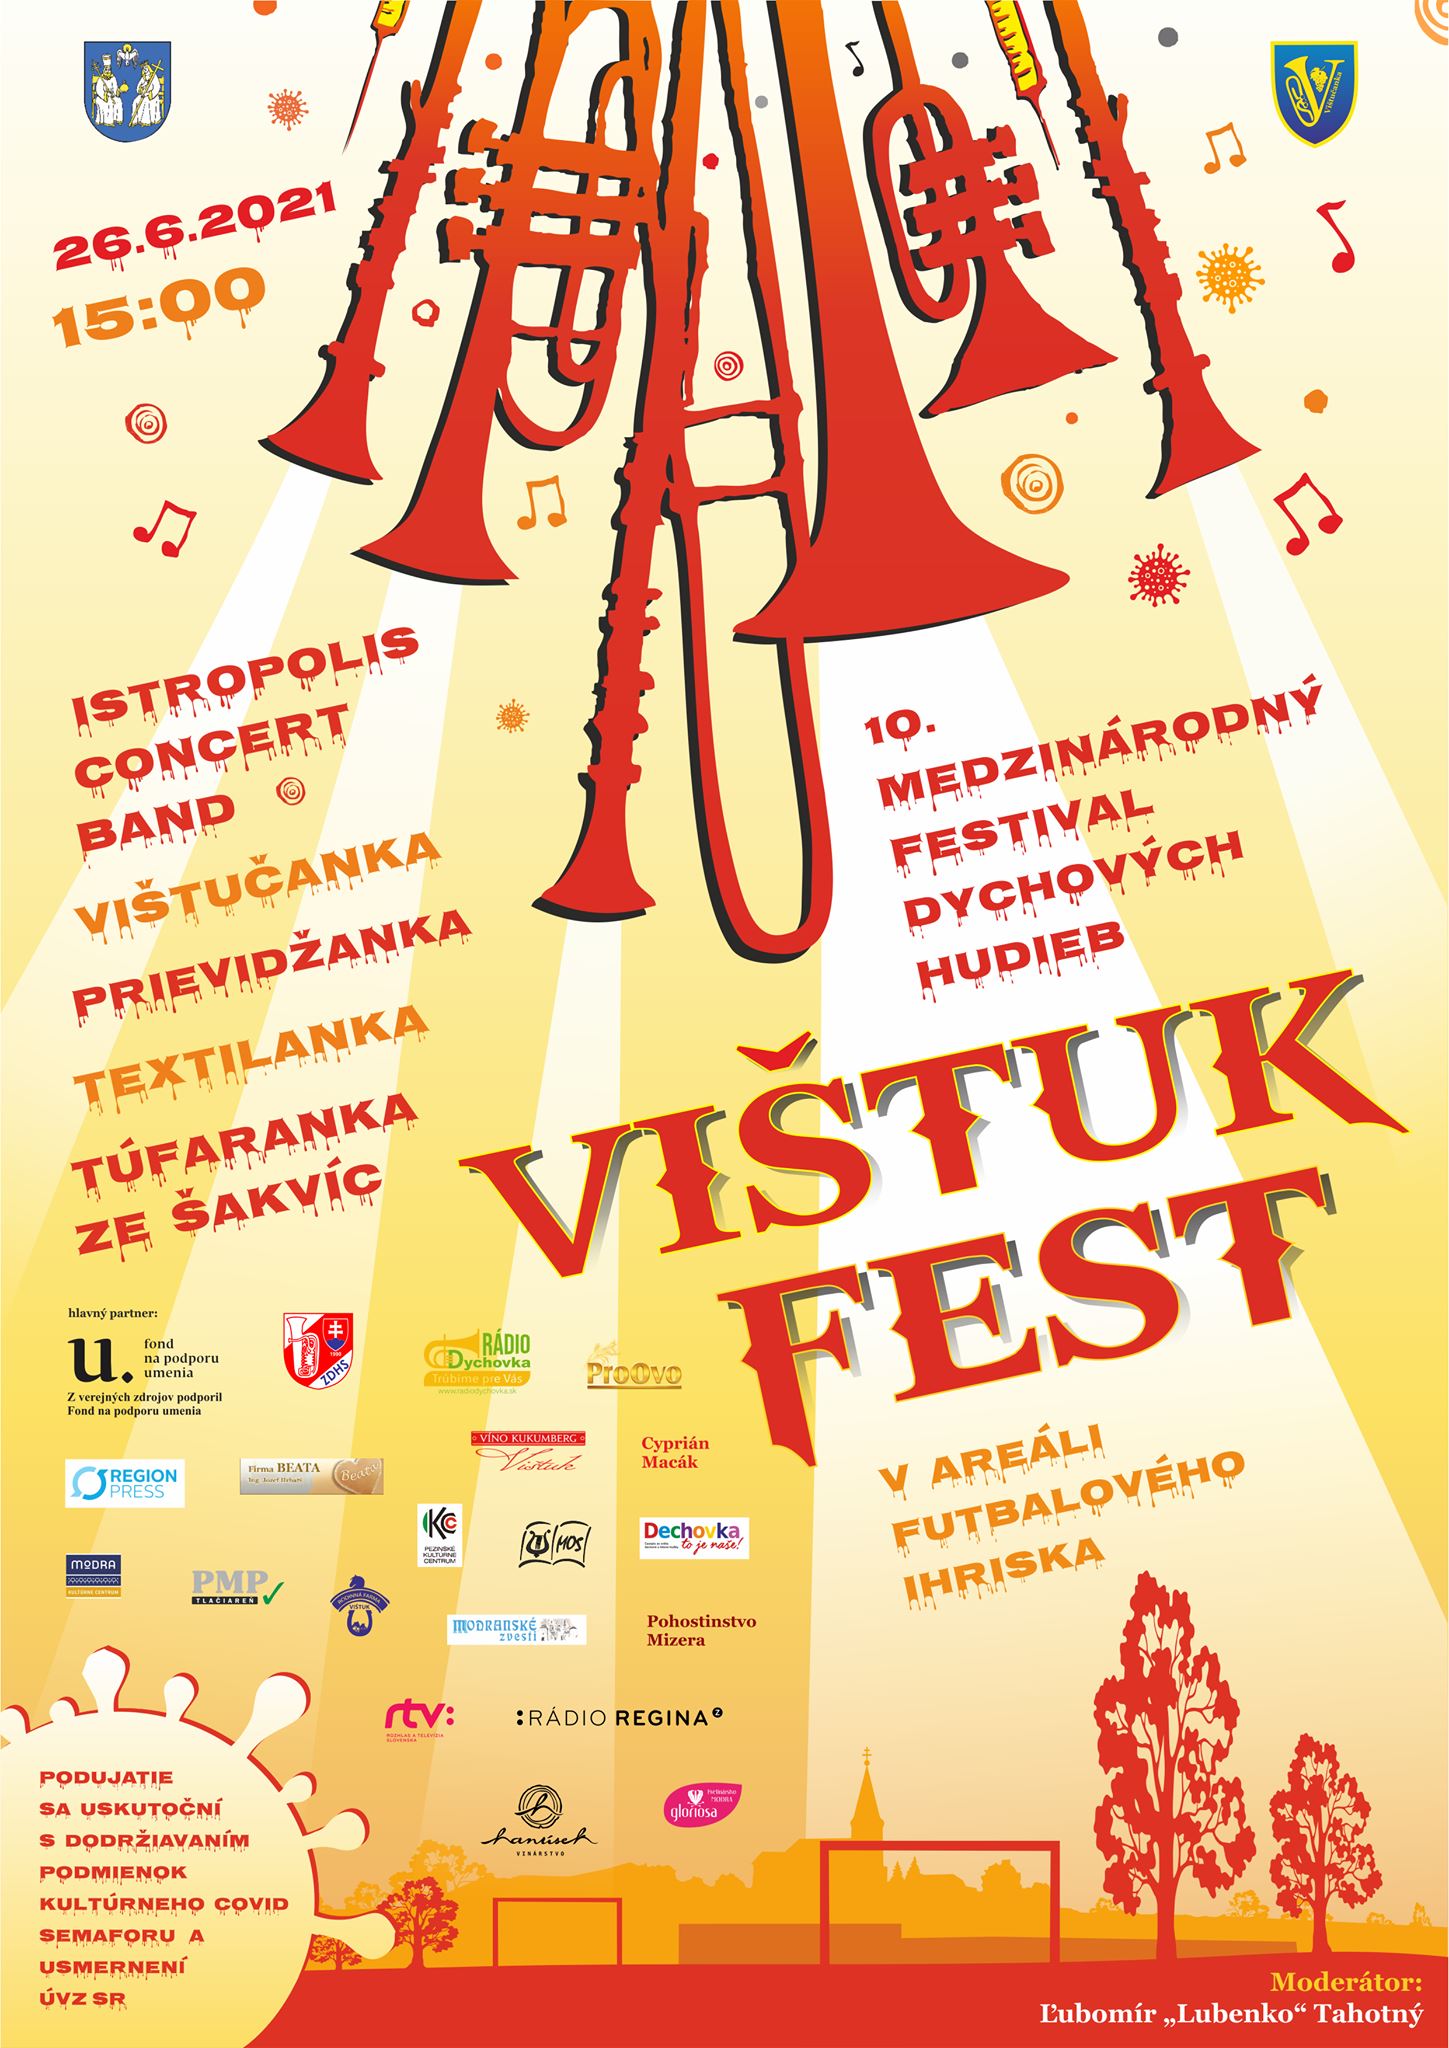 NOV - - - Vitukfest  2021 - 10. medzinrodn festival dychovch hudieb 